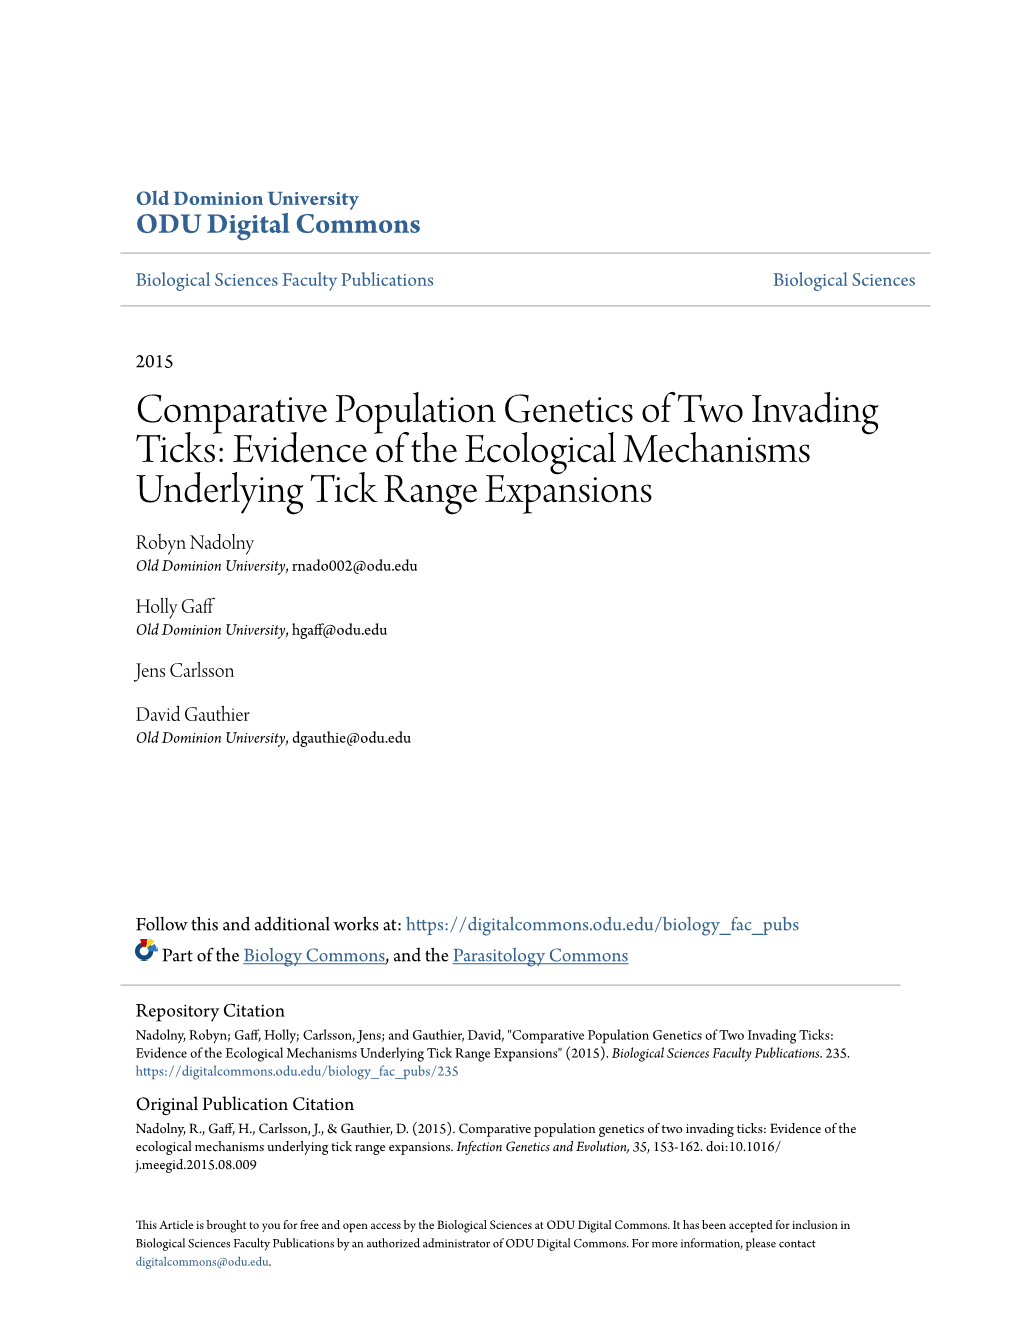 Comparative Population Genetics of Two Invading Ticks